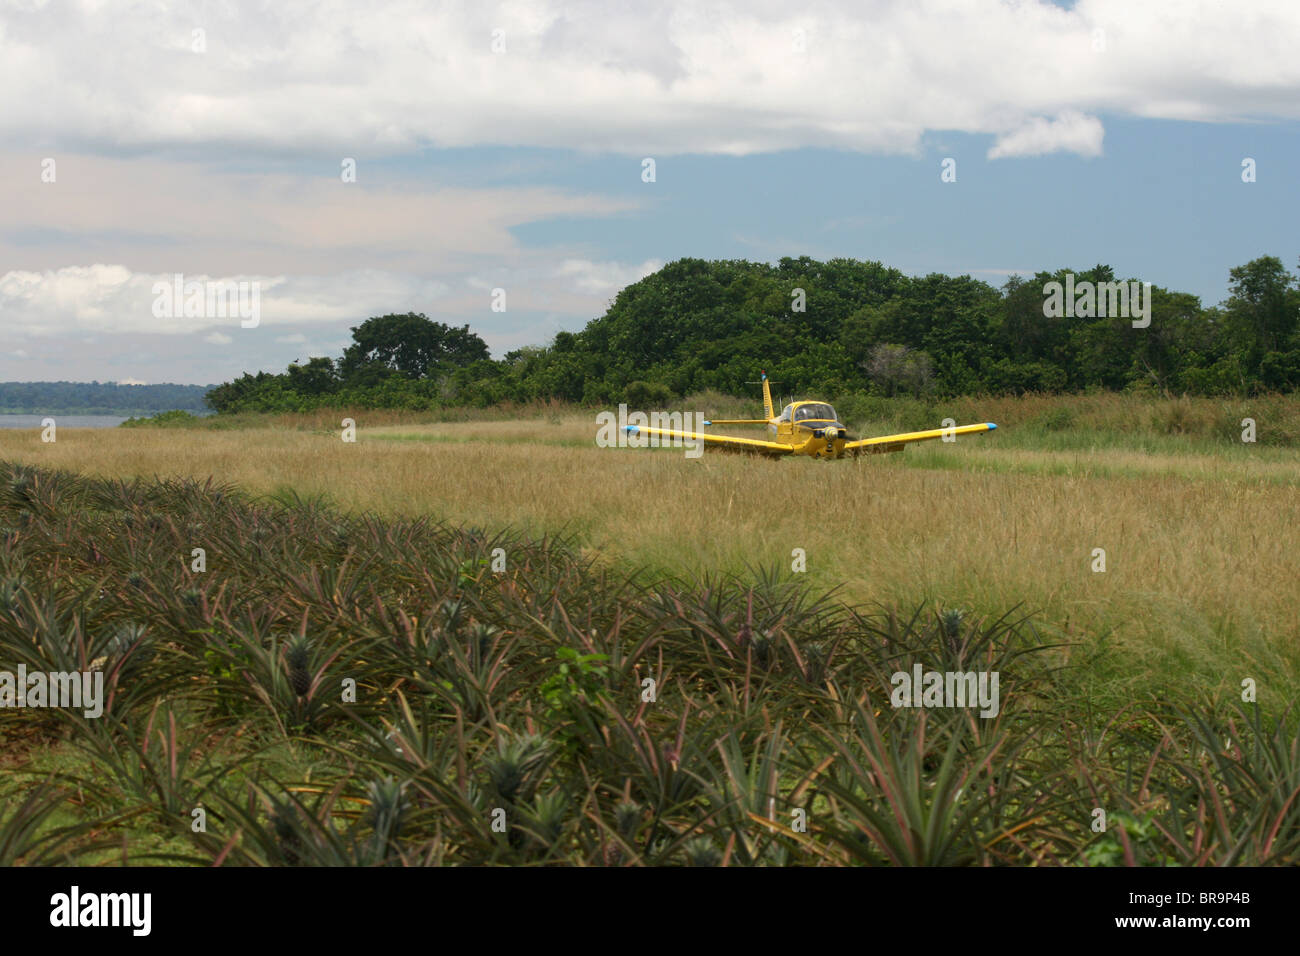 A Fuji FA200 Aero Subaru single engine aerobatic plane lands on a rural airstrip in Uganda with pineapples growing on the side Stock Photo